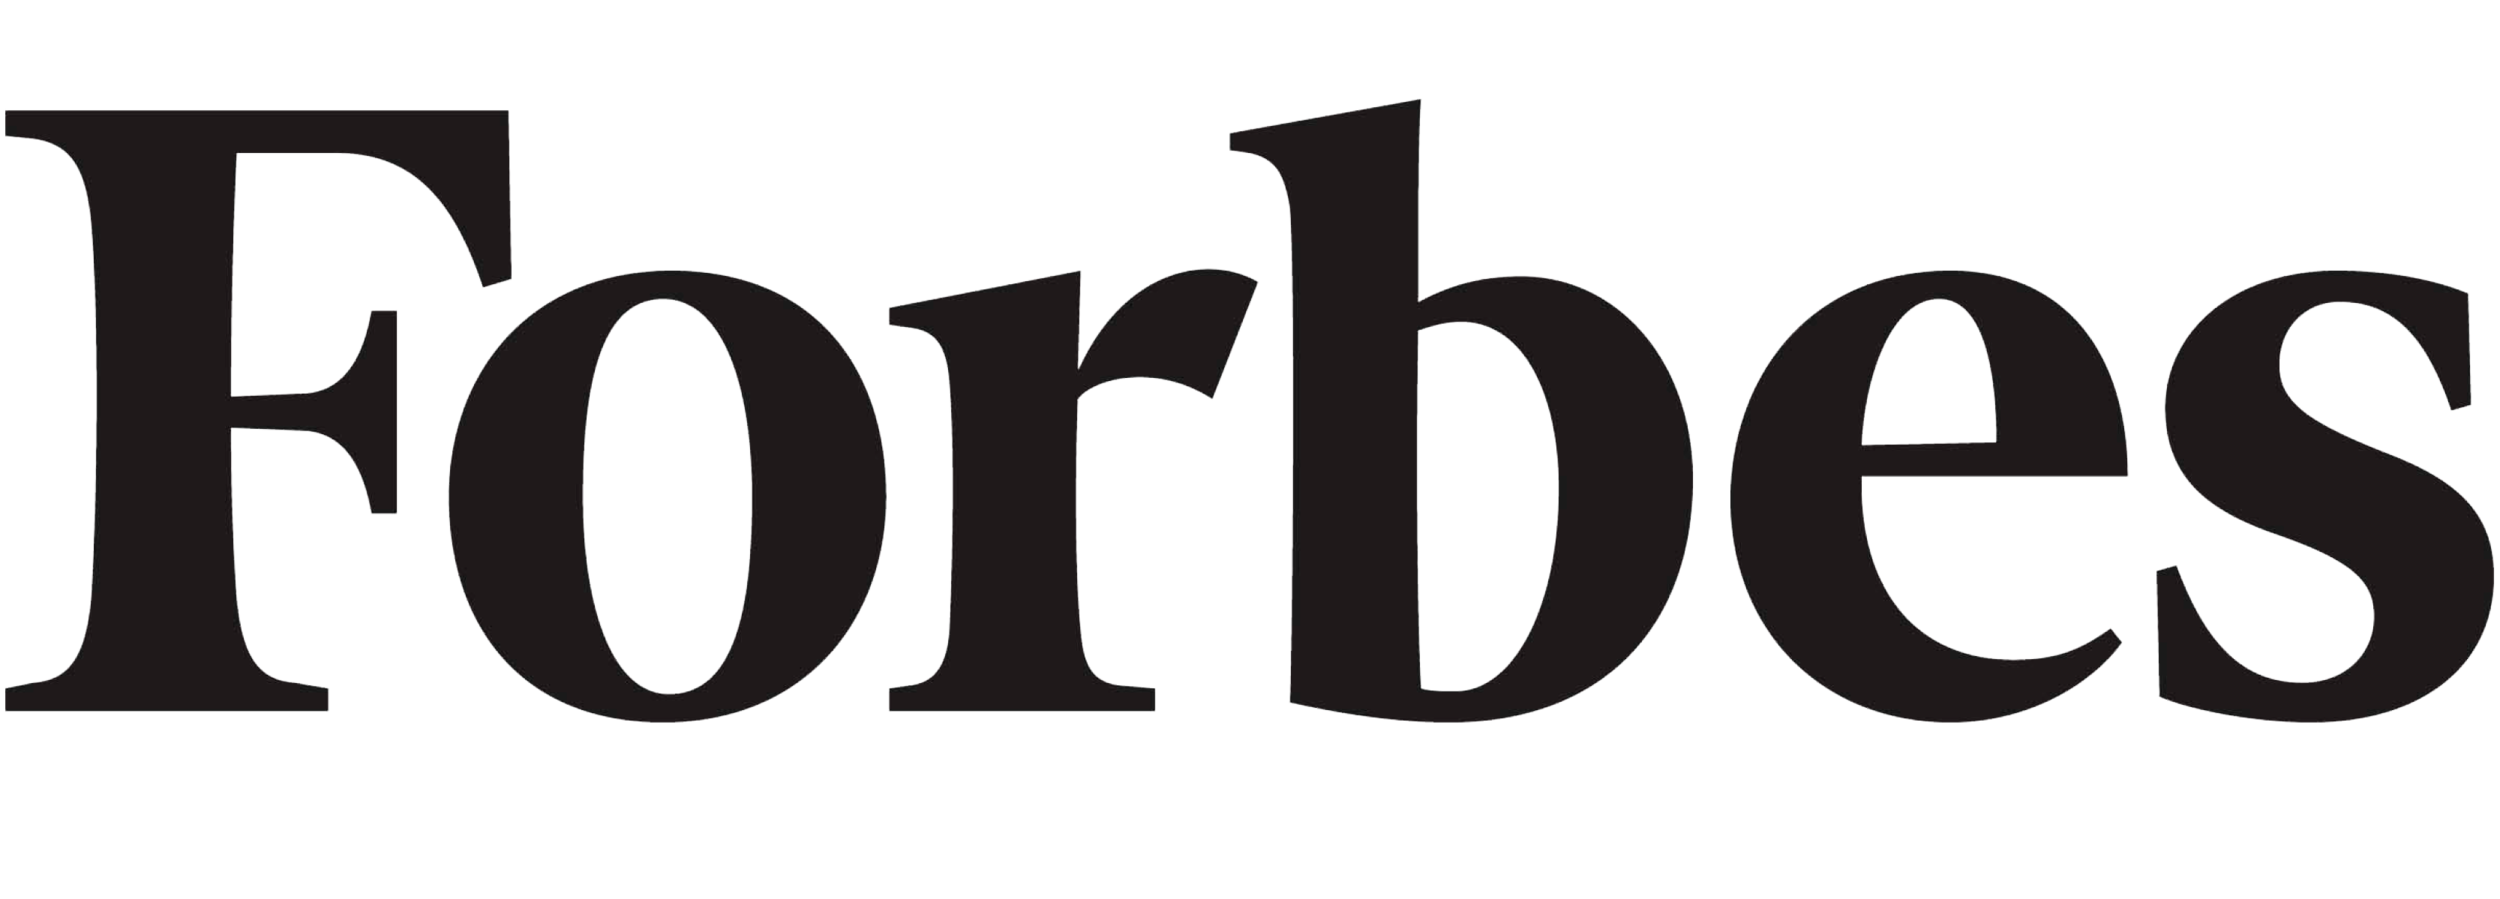 Forbes-Black-Logo-PNG-03003-2-e1517347676630.png